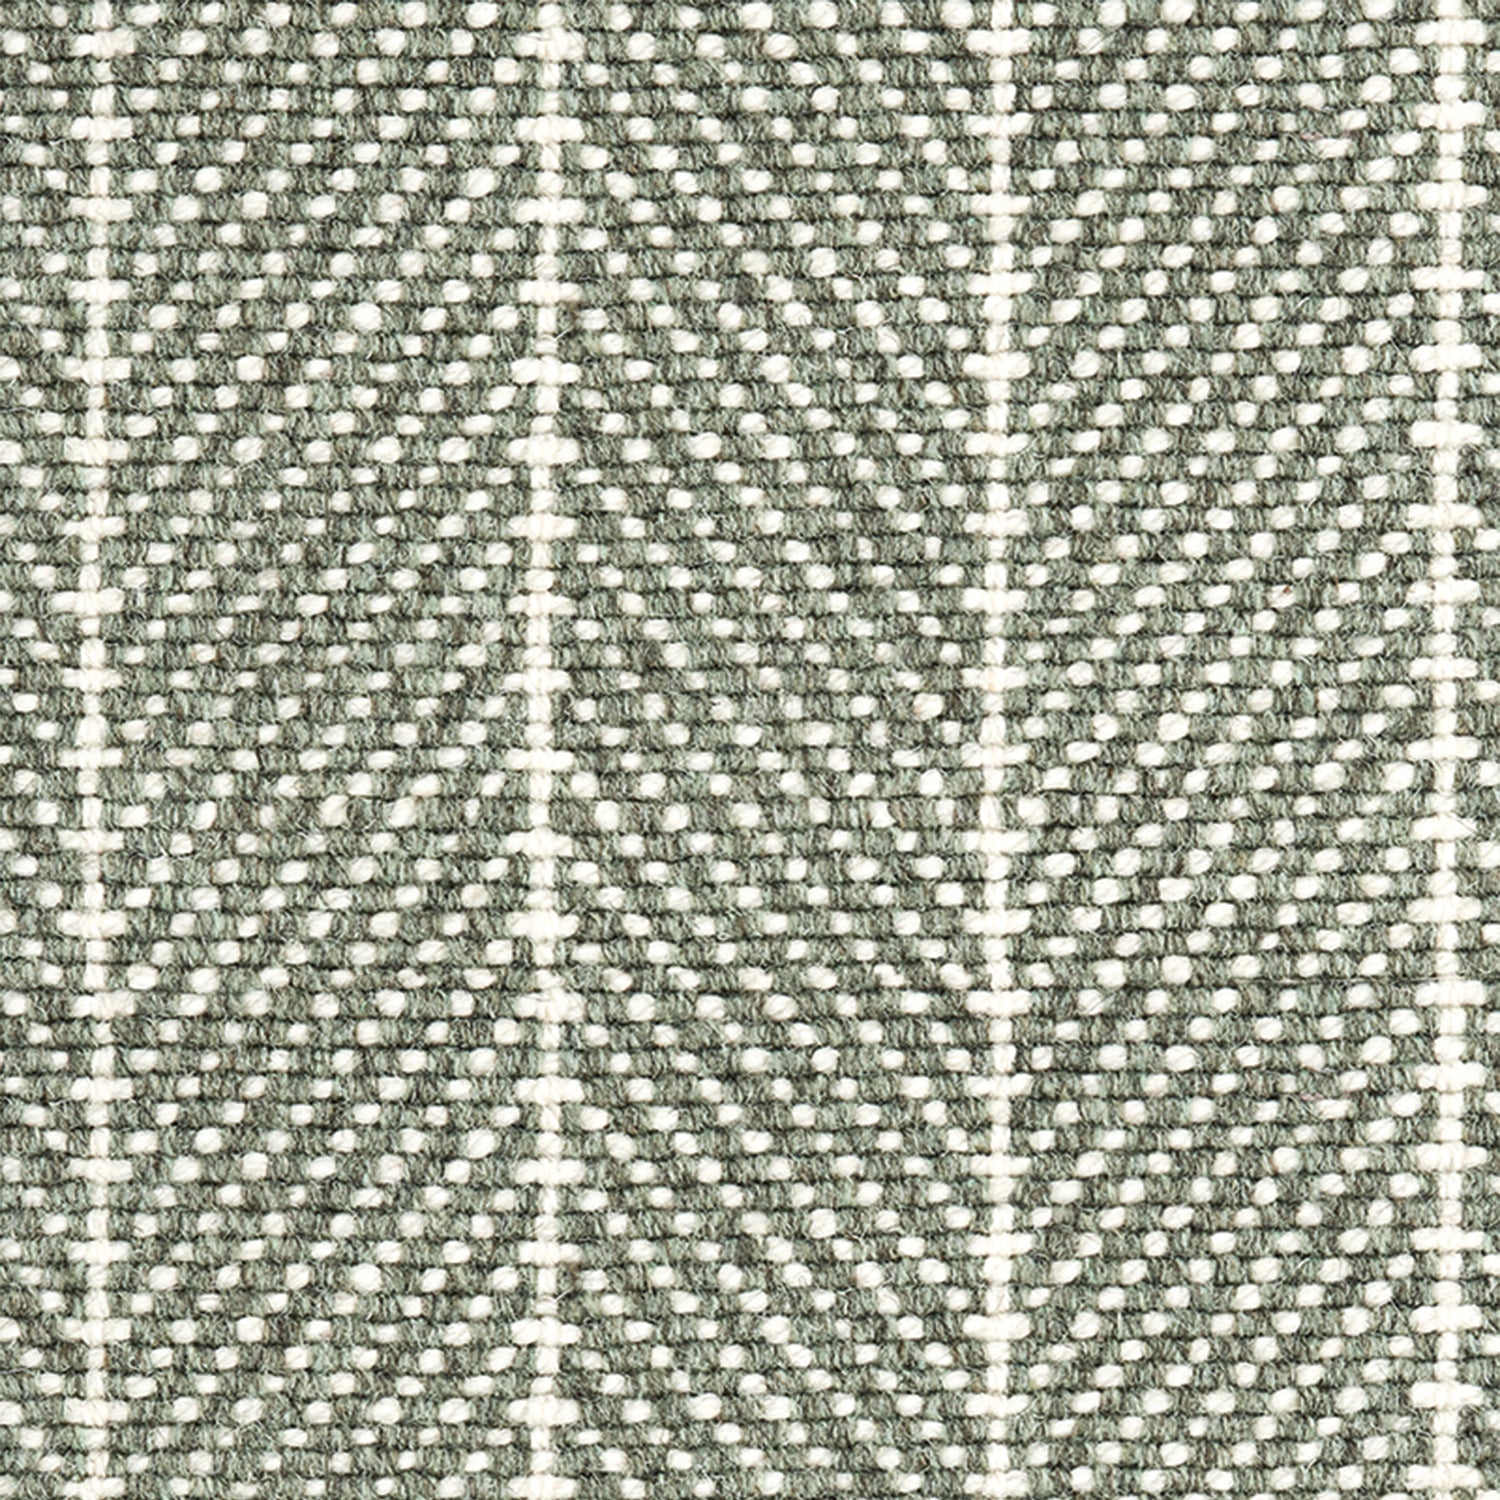 Wool broadloom carpet swatch in a herringbone stripe in olive and cream.